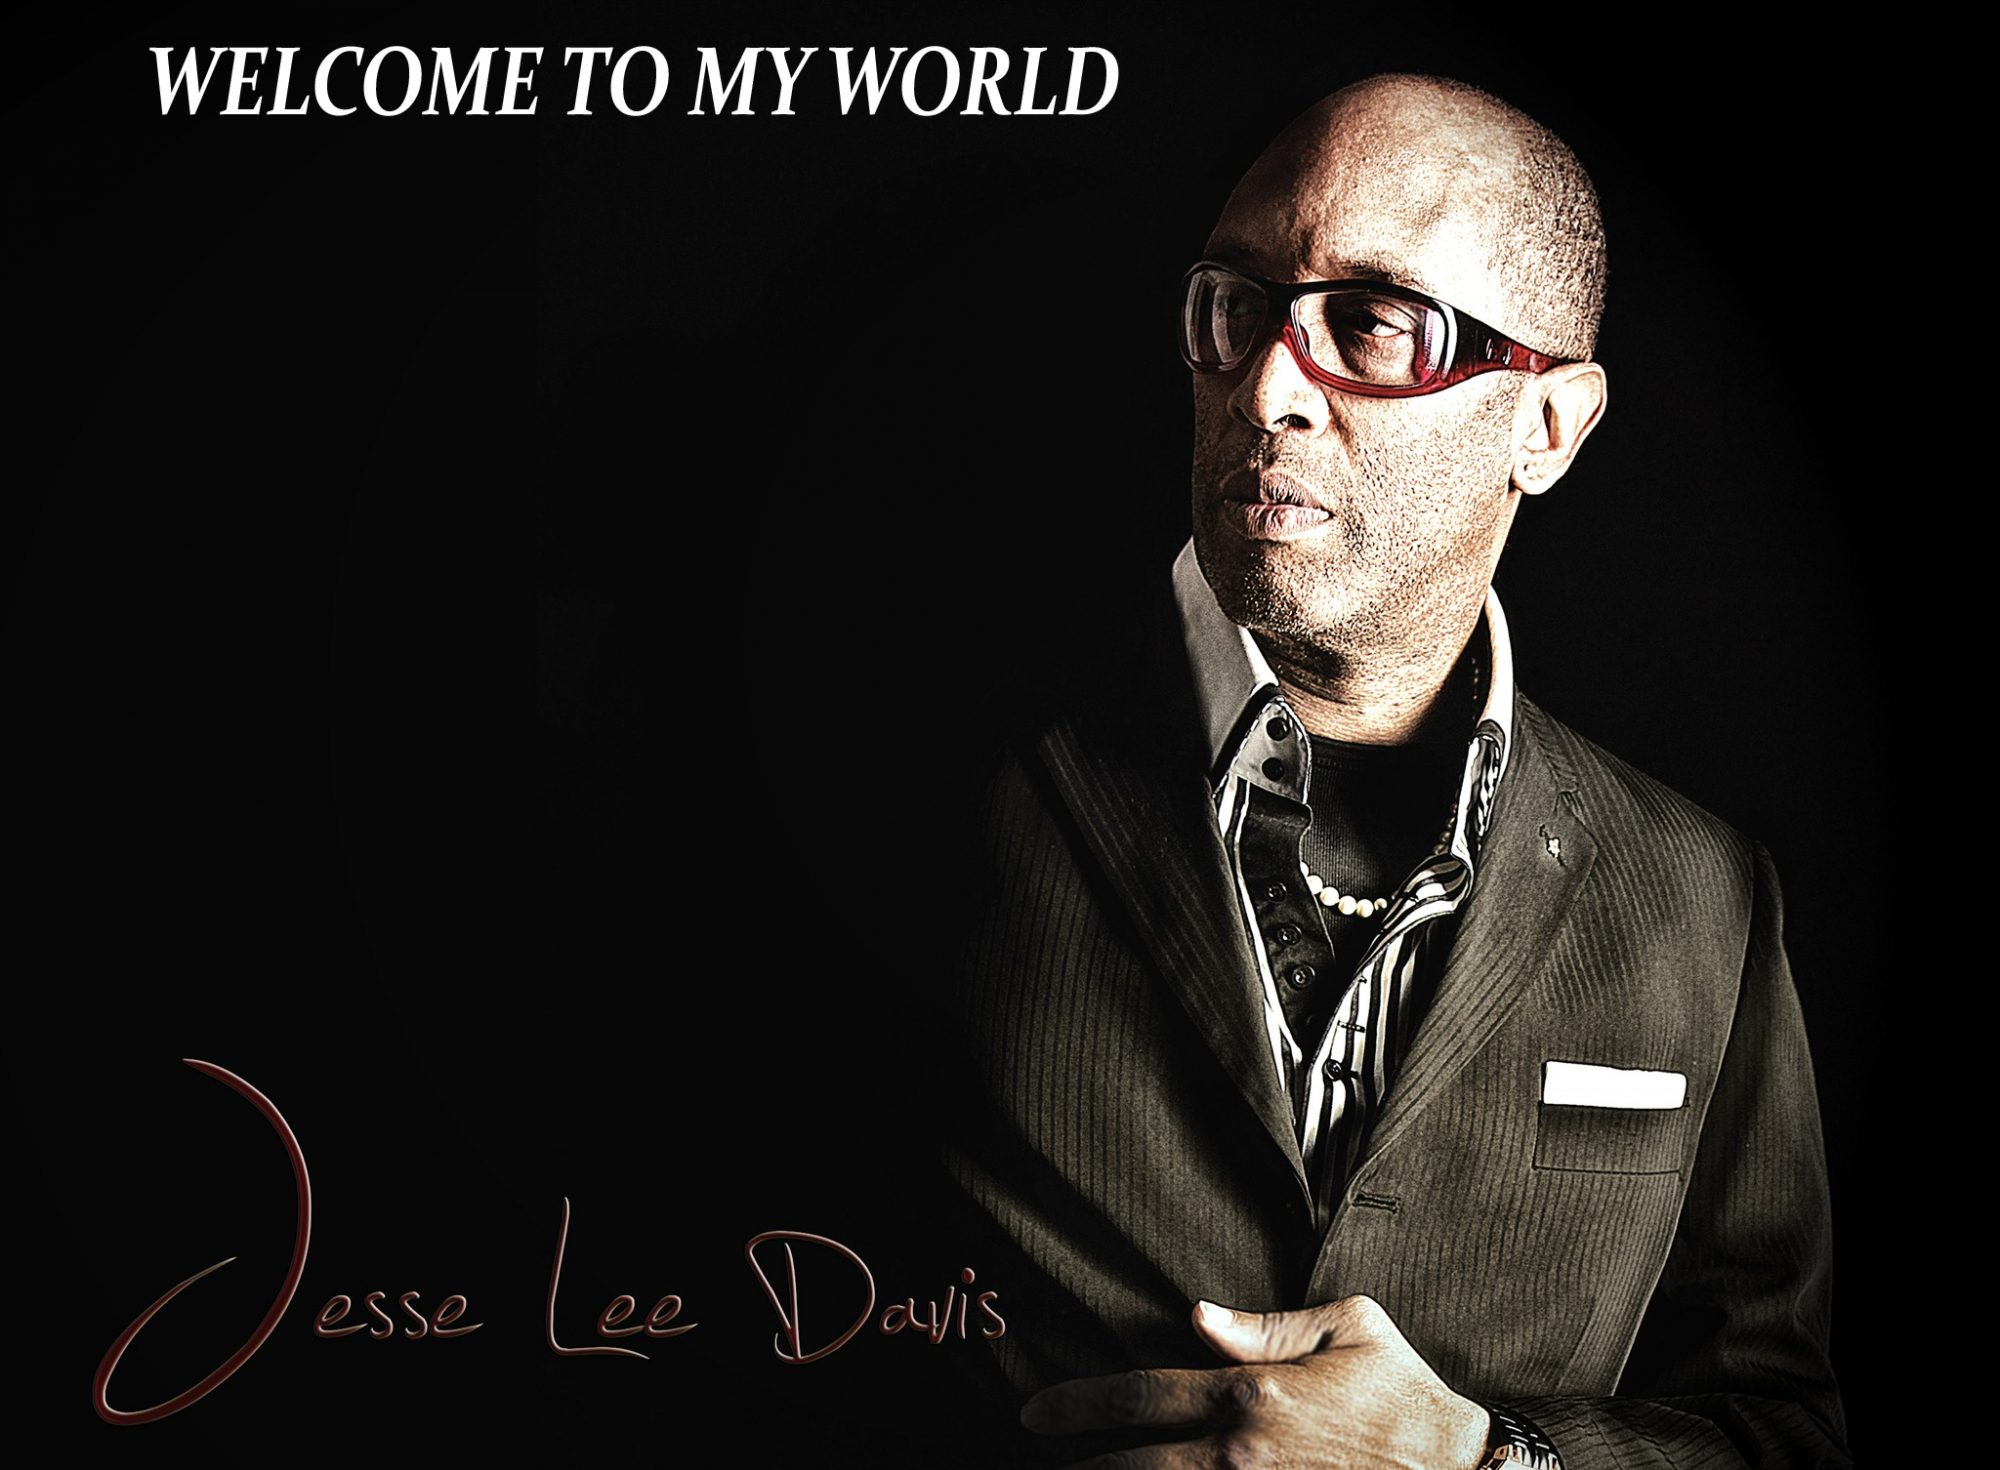 Sir Jesse Lee Davis